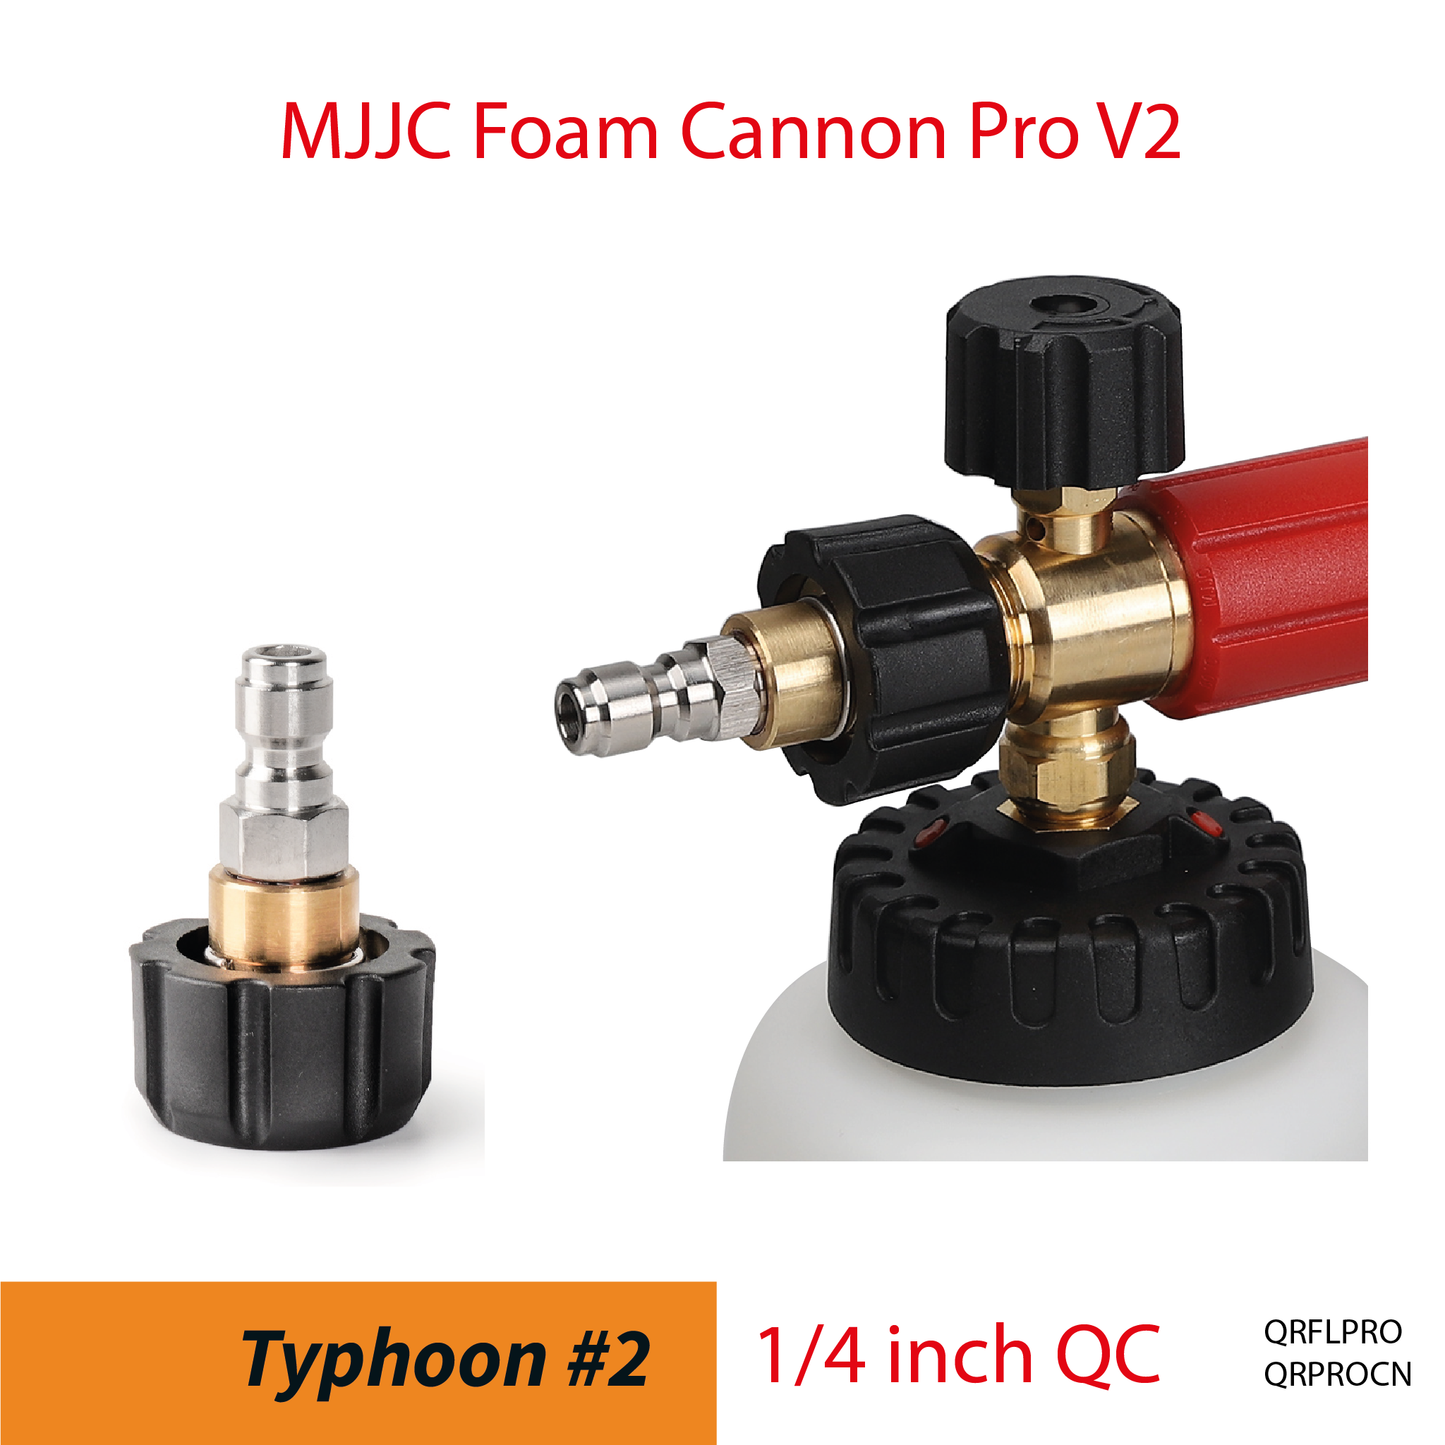 Typhoon presure washer - MJJC Foam Cannon Pro V2 (Pressure Washer Snow Foam Lance Gun)